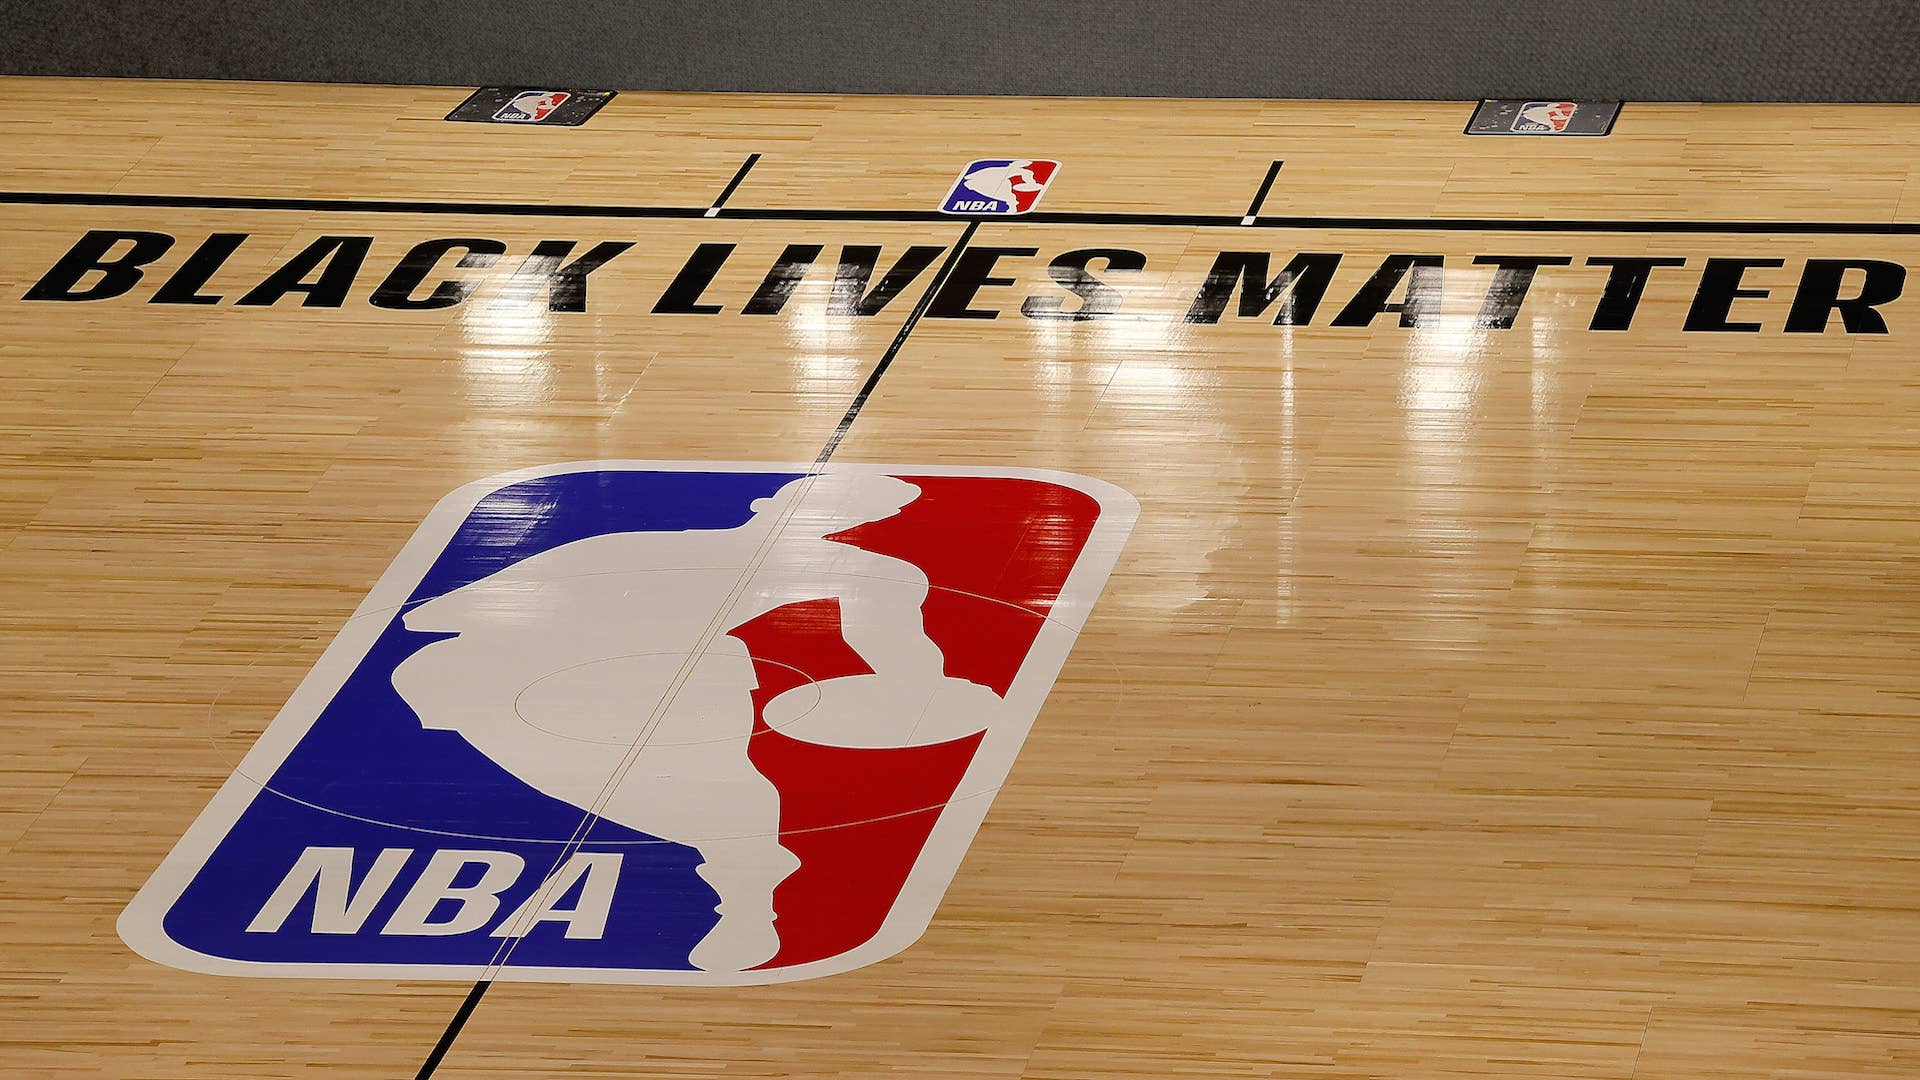 The Black Lives Matter logo is seen on an empty court